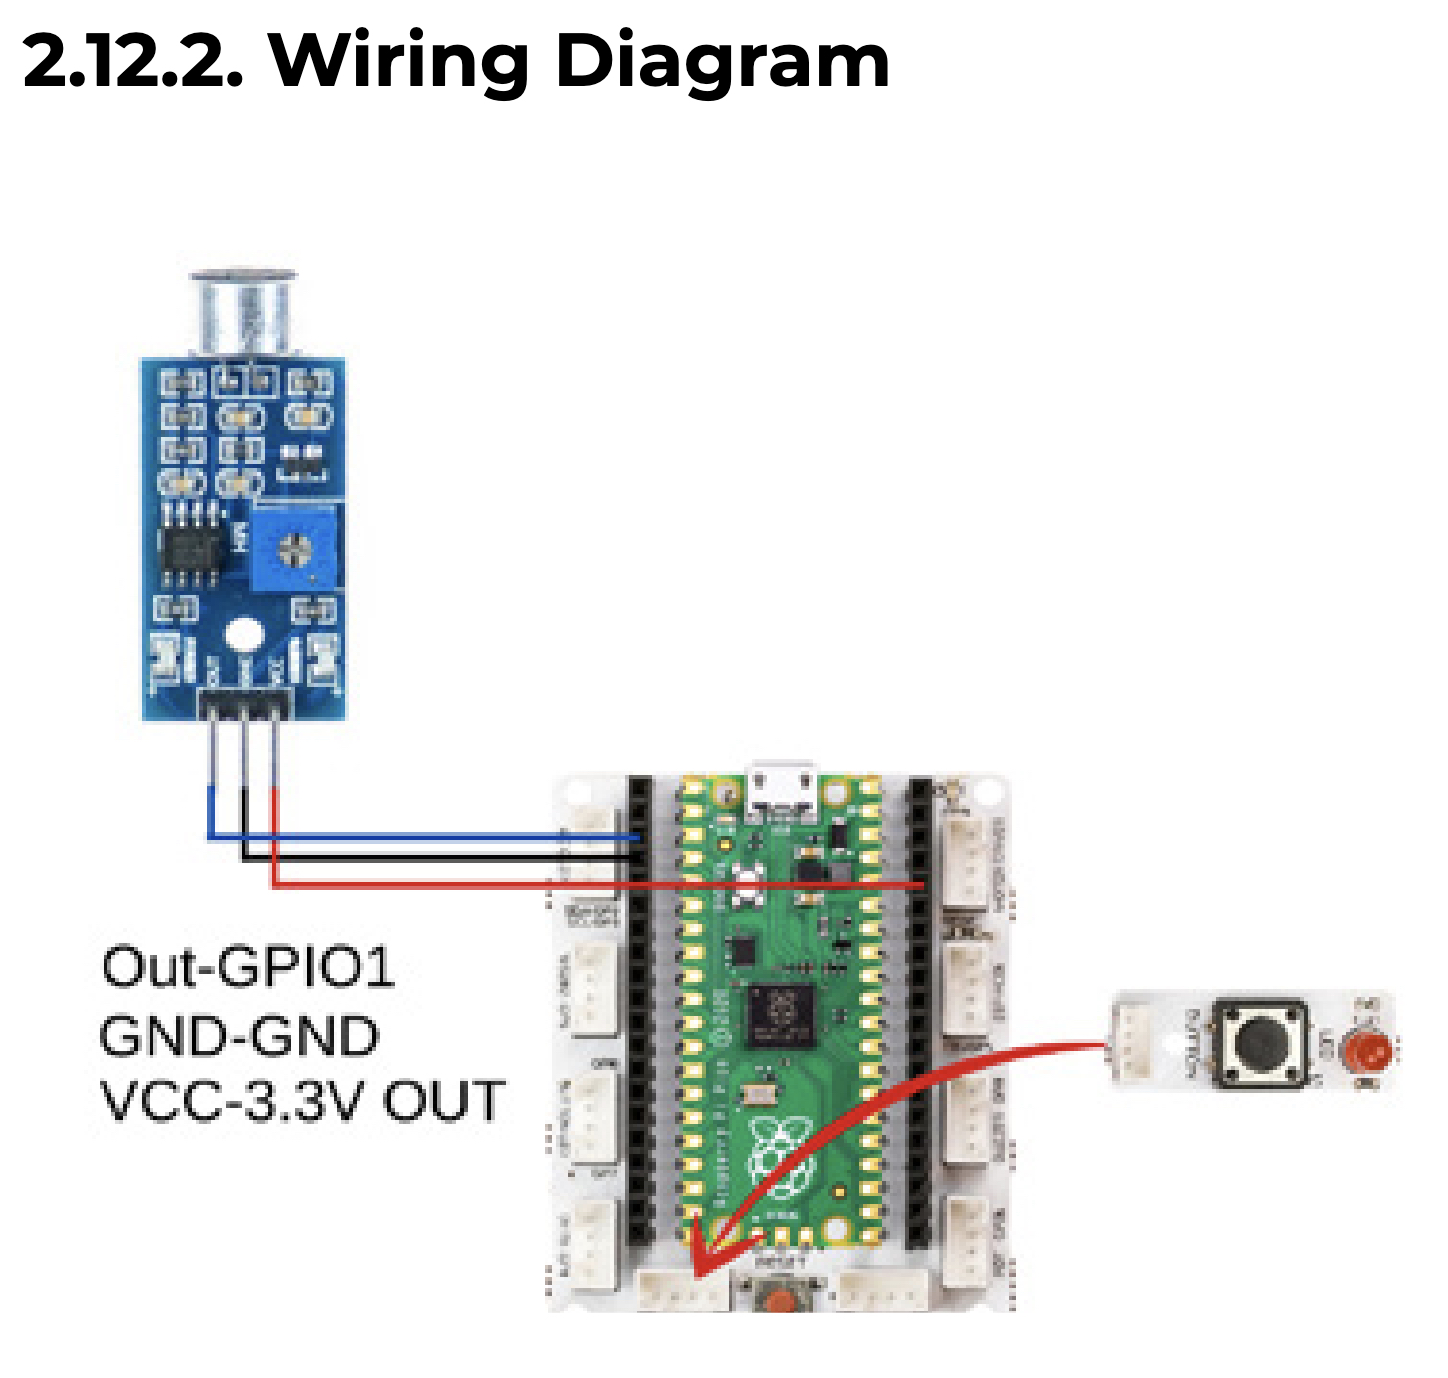 2.11.2 - Incorrect wiring diagram.jpg